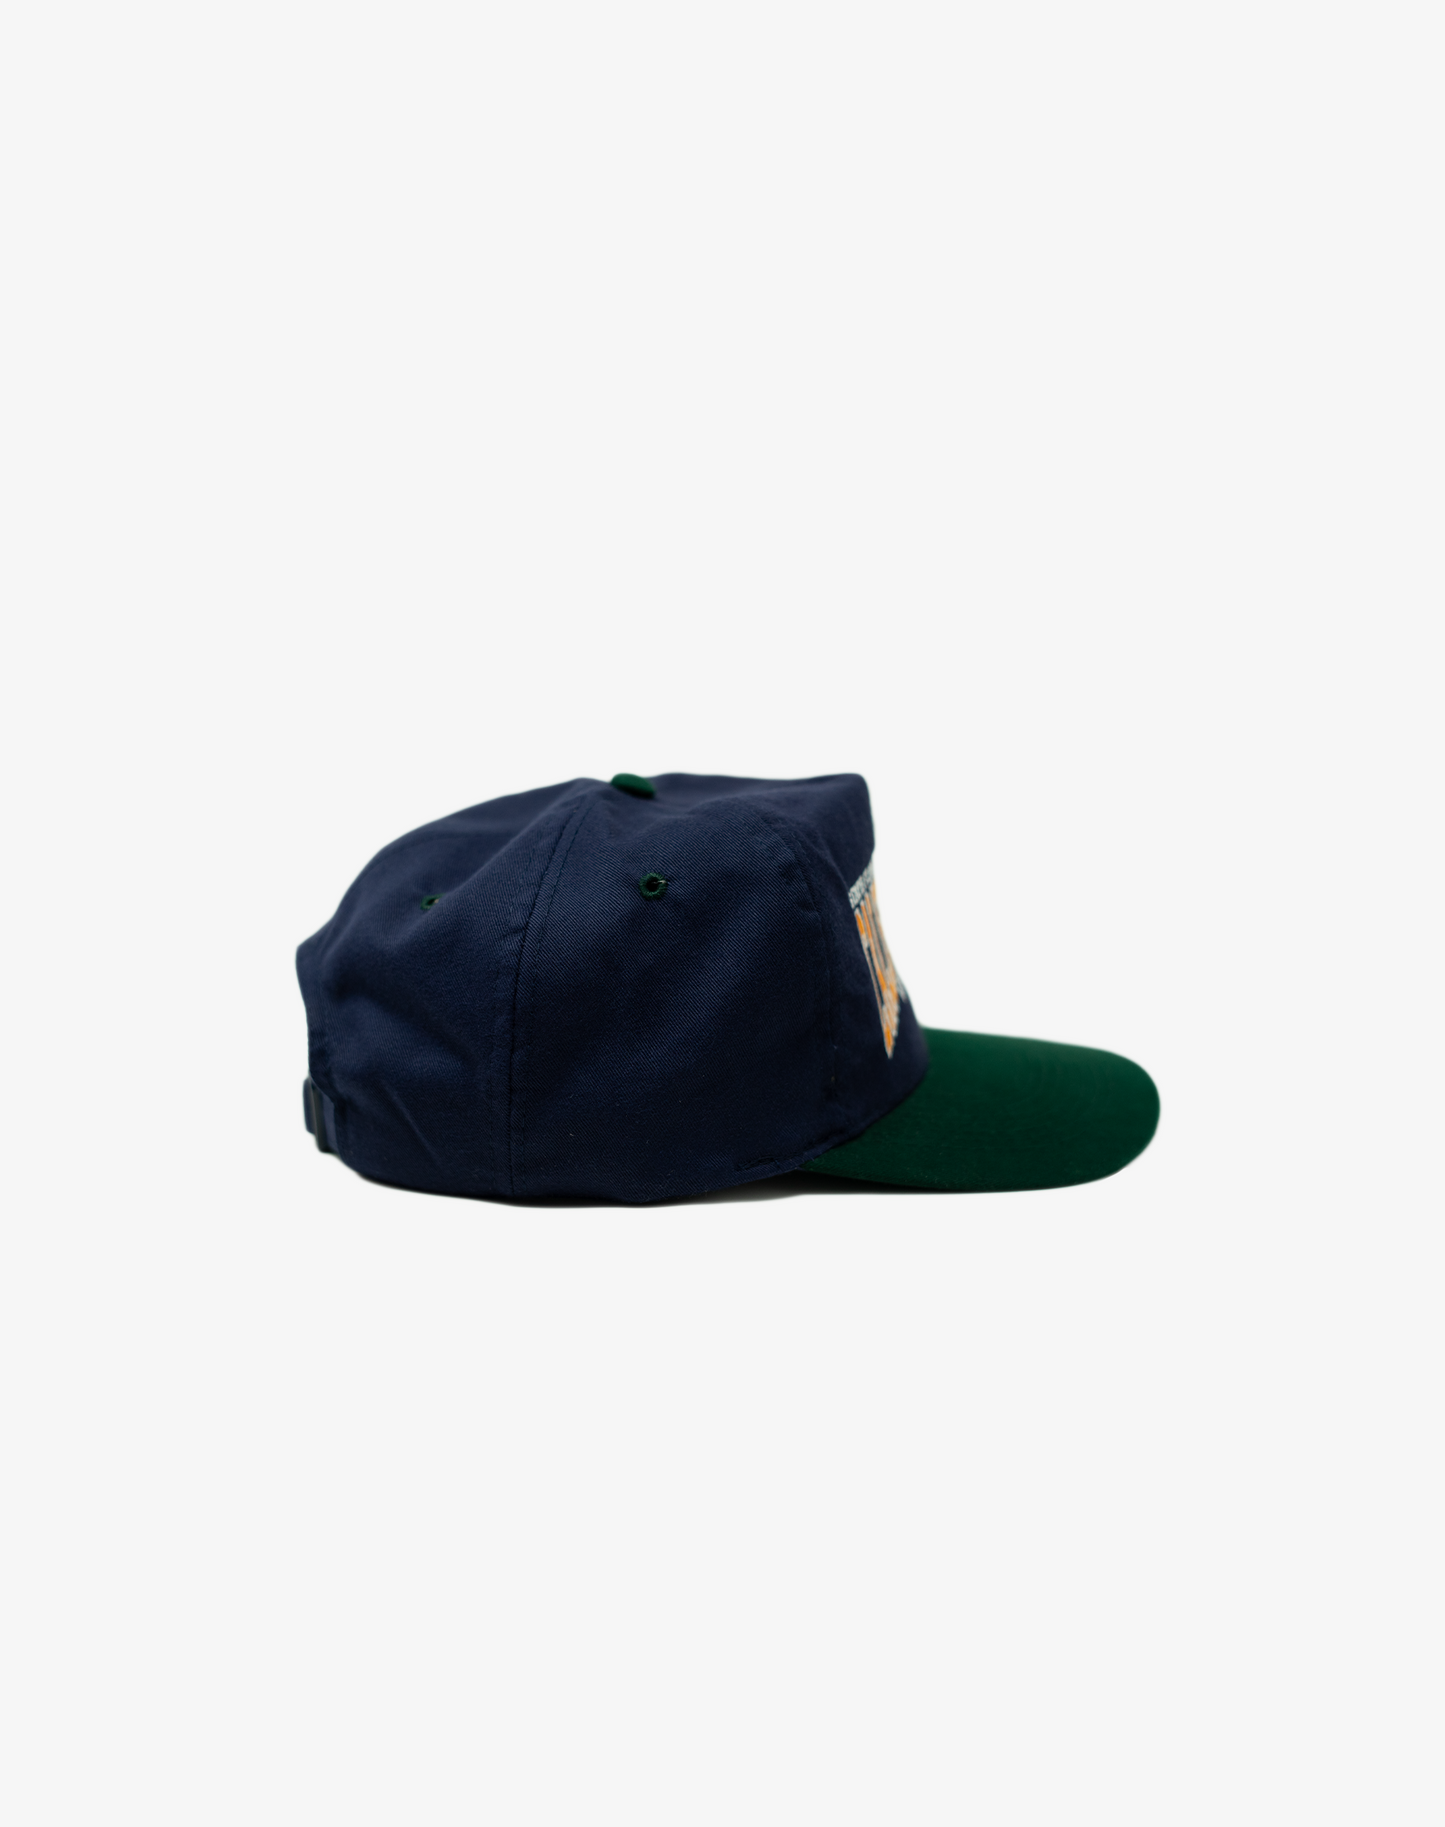 California Poppy - Alumni Dark Green/Navy Hat